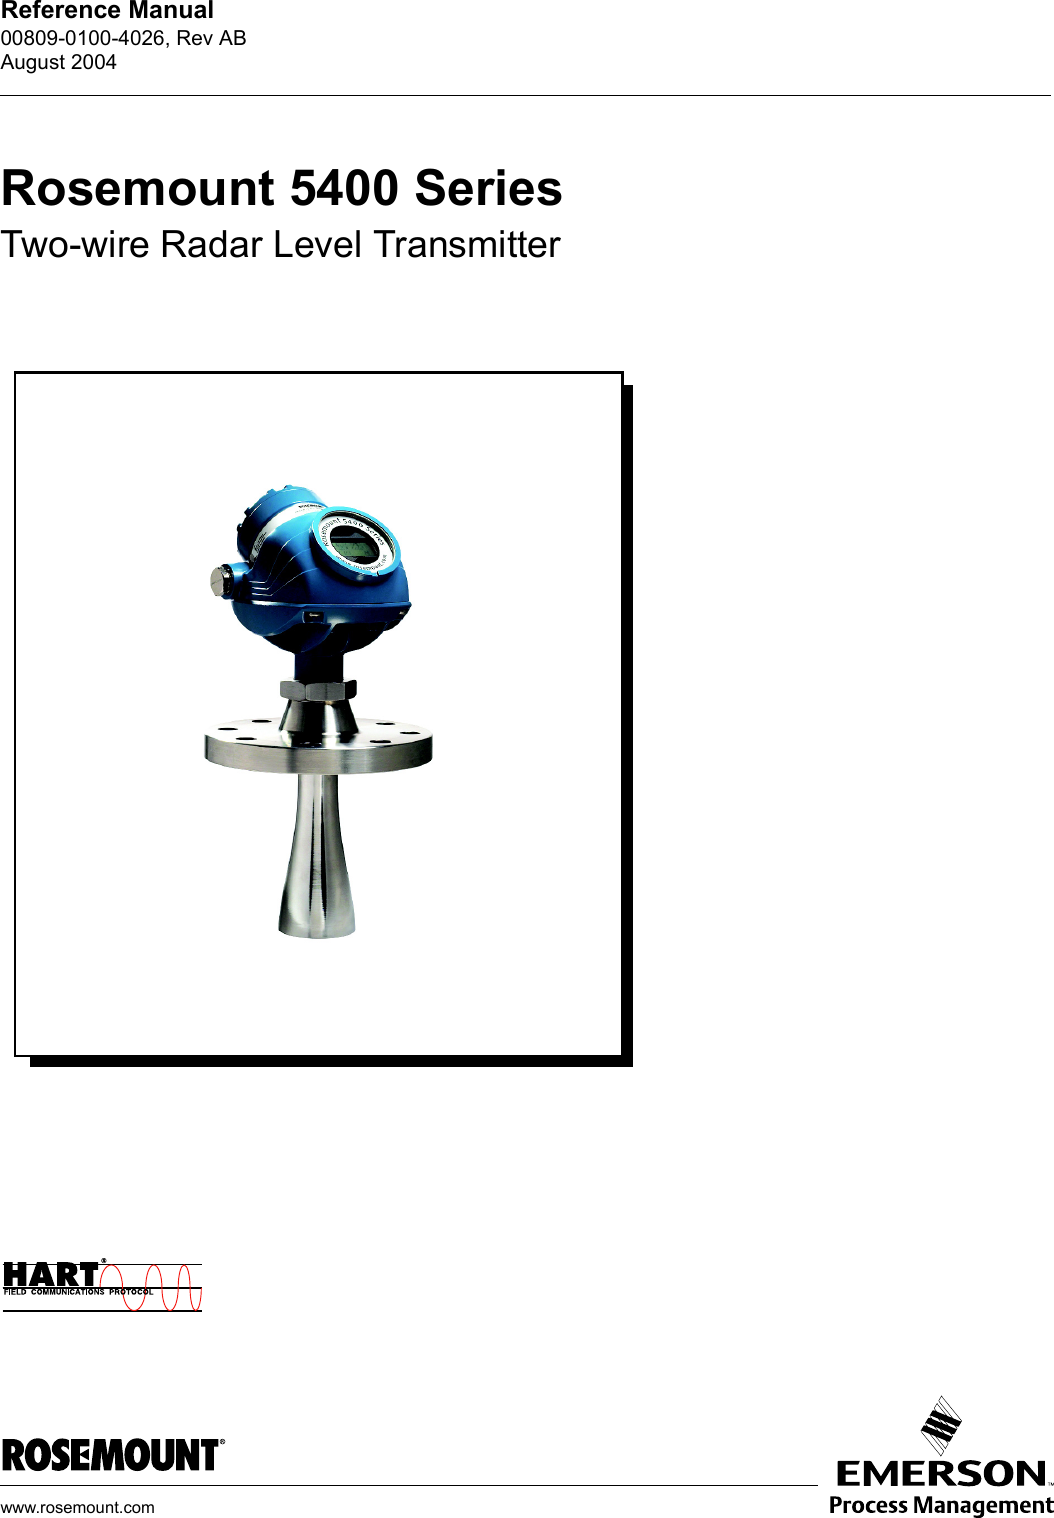 www.rosemount.comReference Manual 00809-0100-4026, Rev ABAugust 2004Rosemount 5400 SeriesTwo-wire Radar Level Transmitter